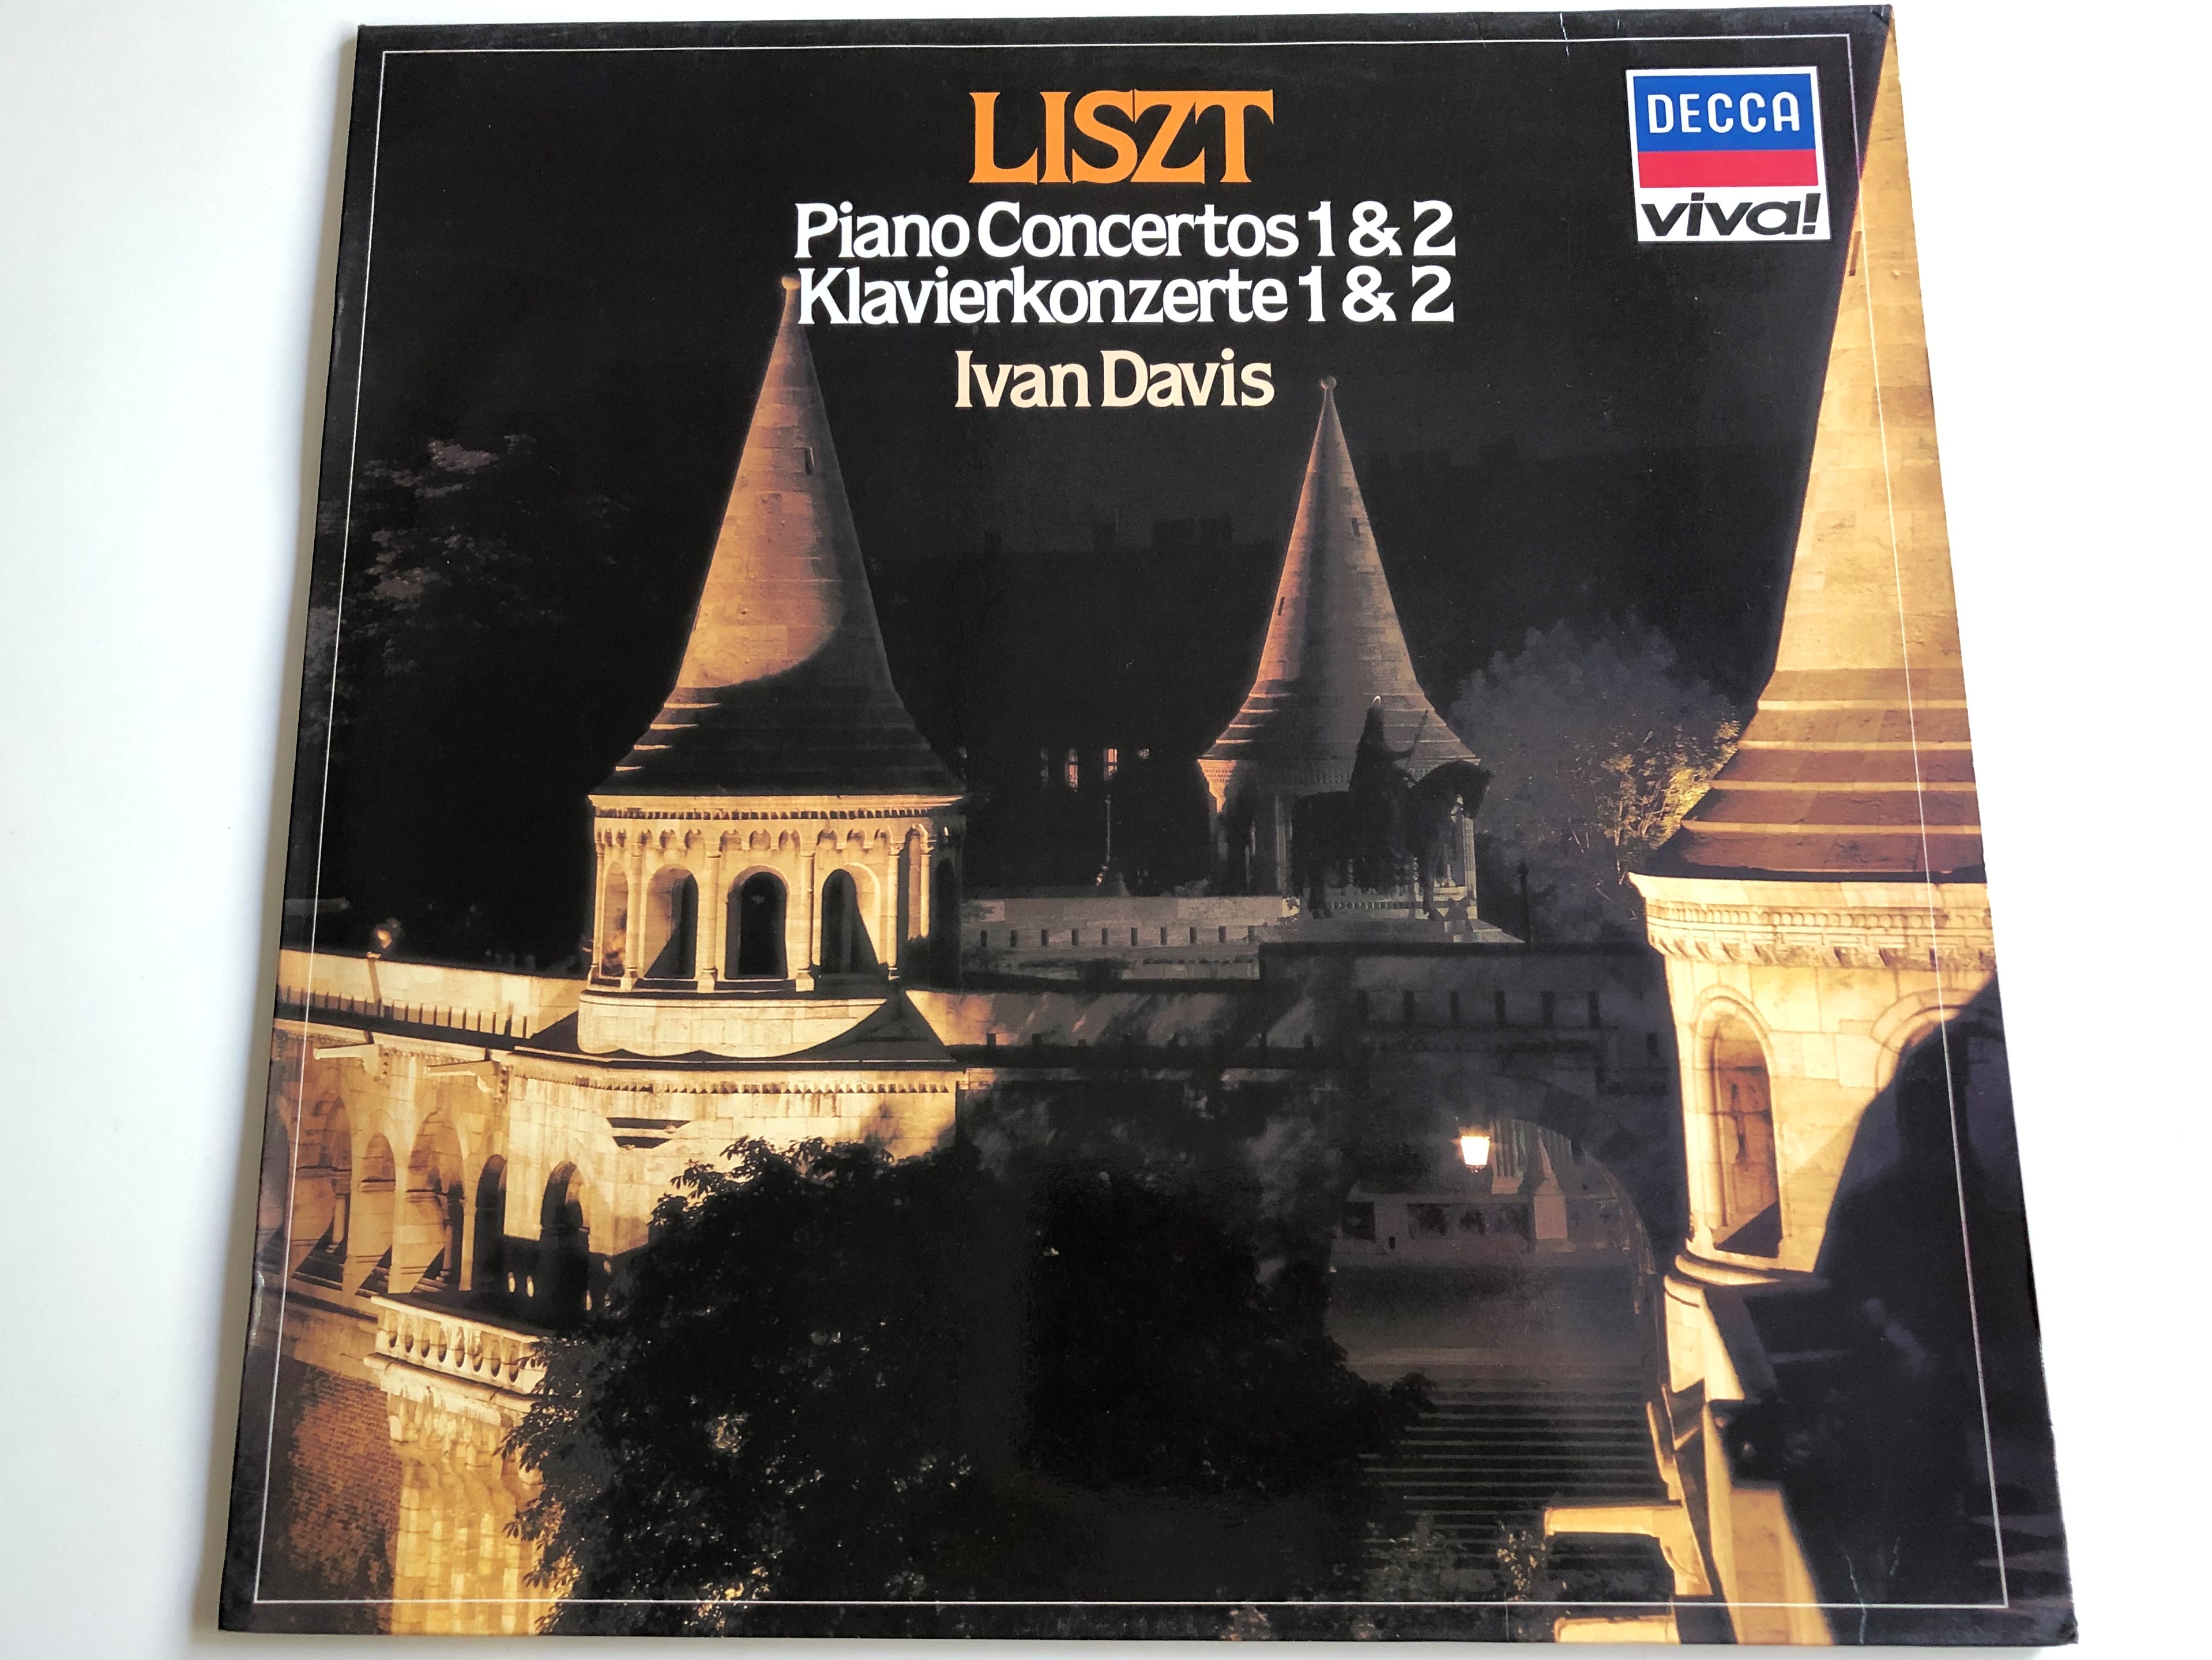 liszt-piano-concertos-1-2-ivan-davis-piano-royal-philharmonic-orchestra-conducted-by-edward-downes-decca-1981-6-1-.jpg